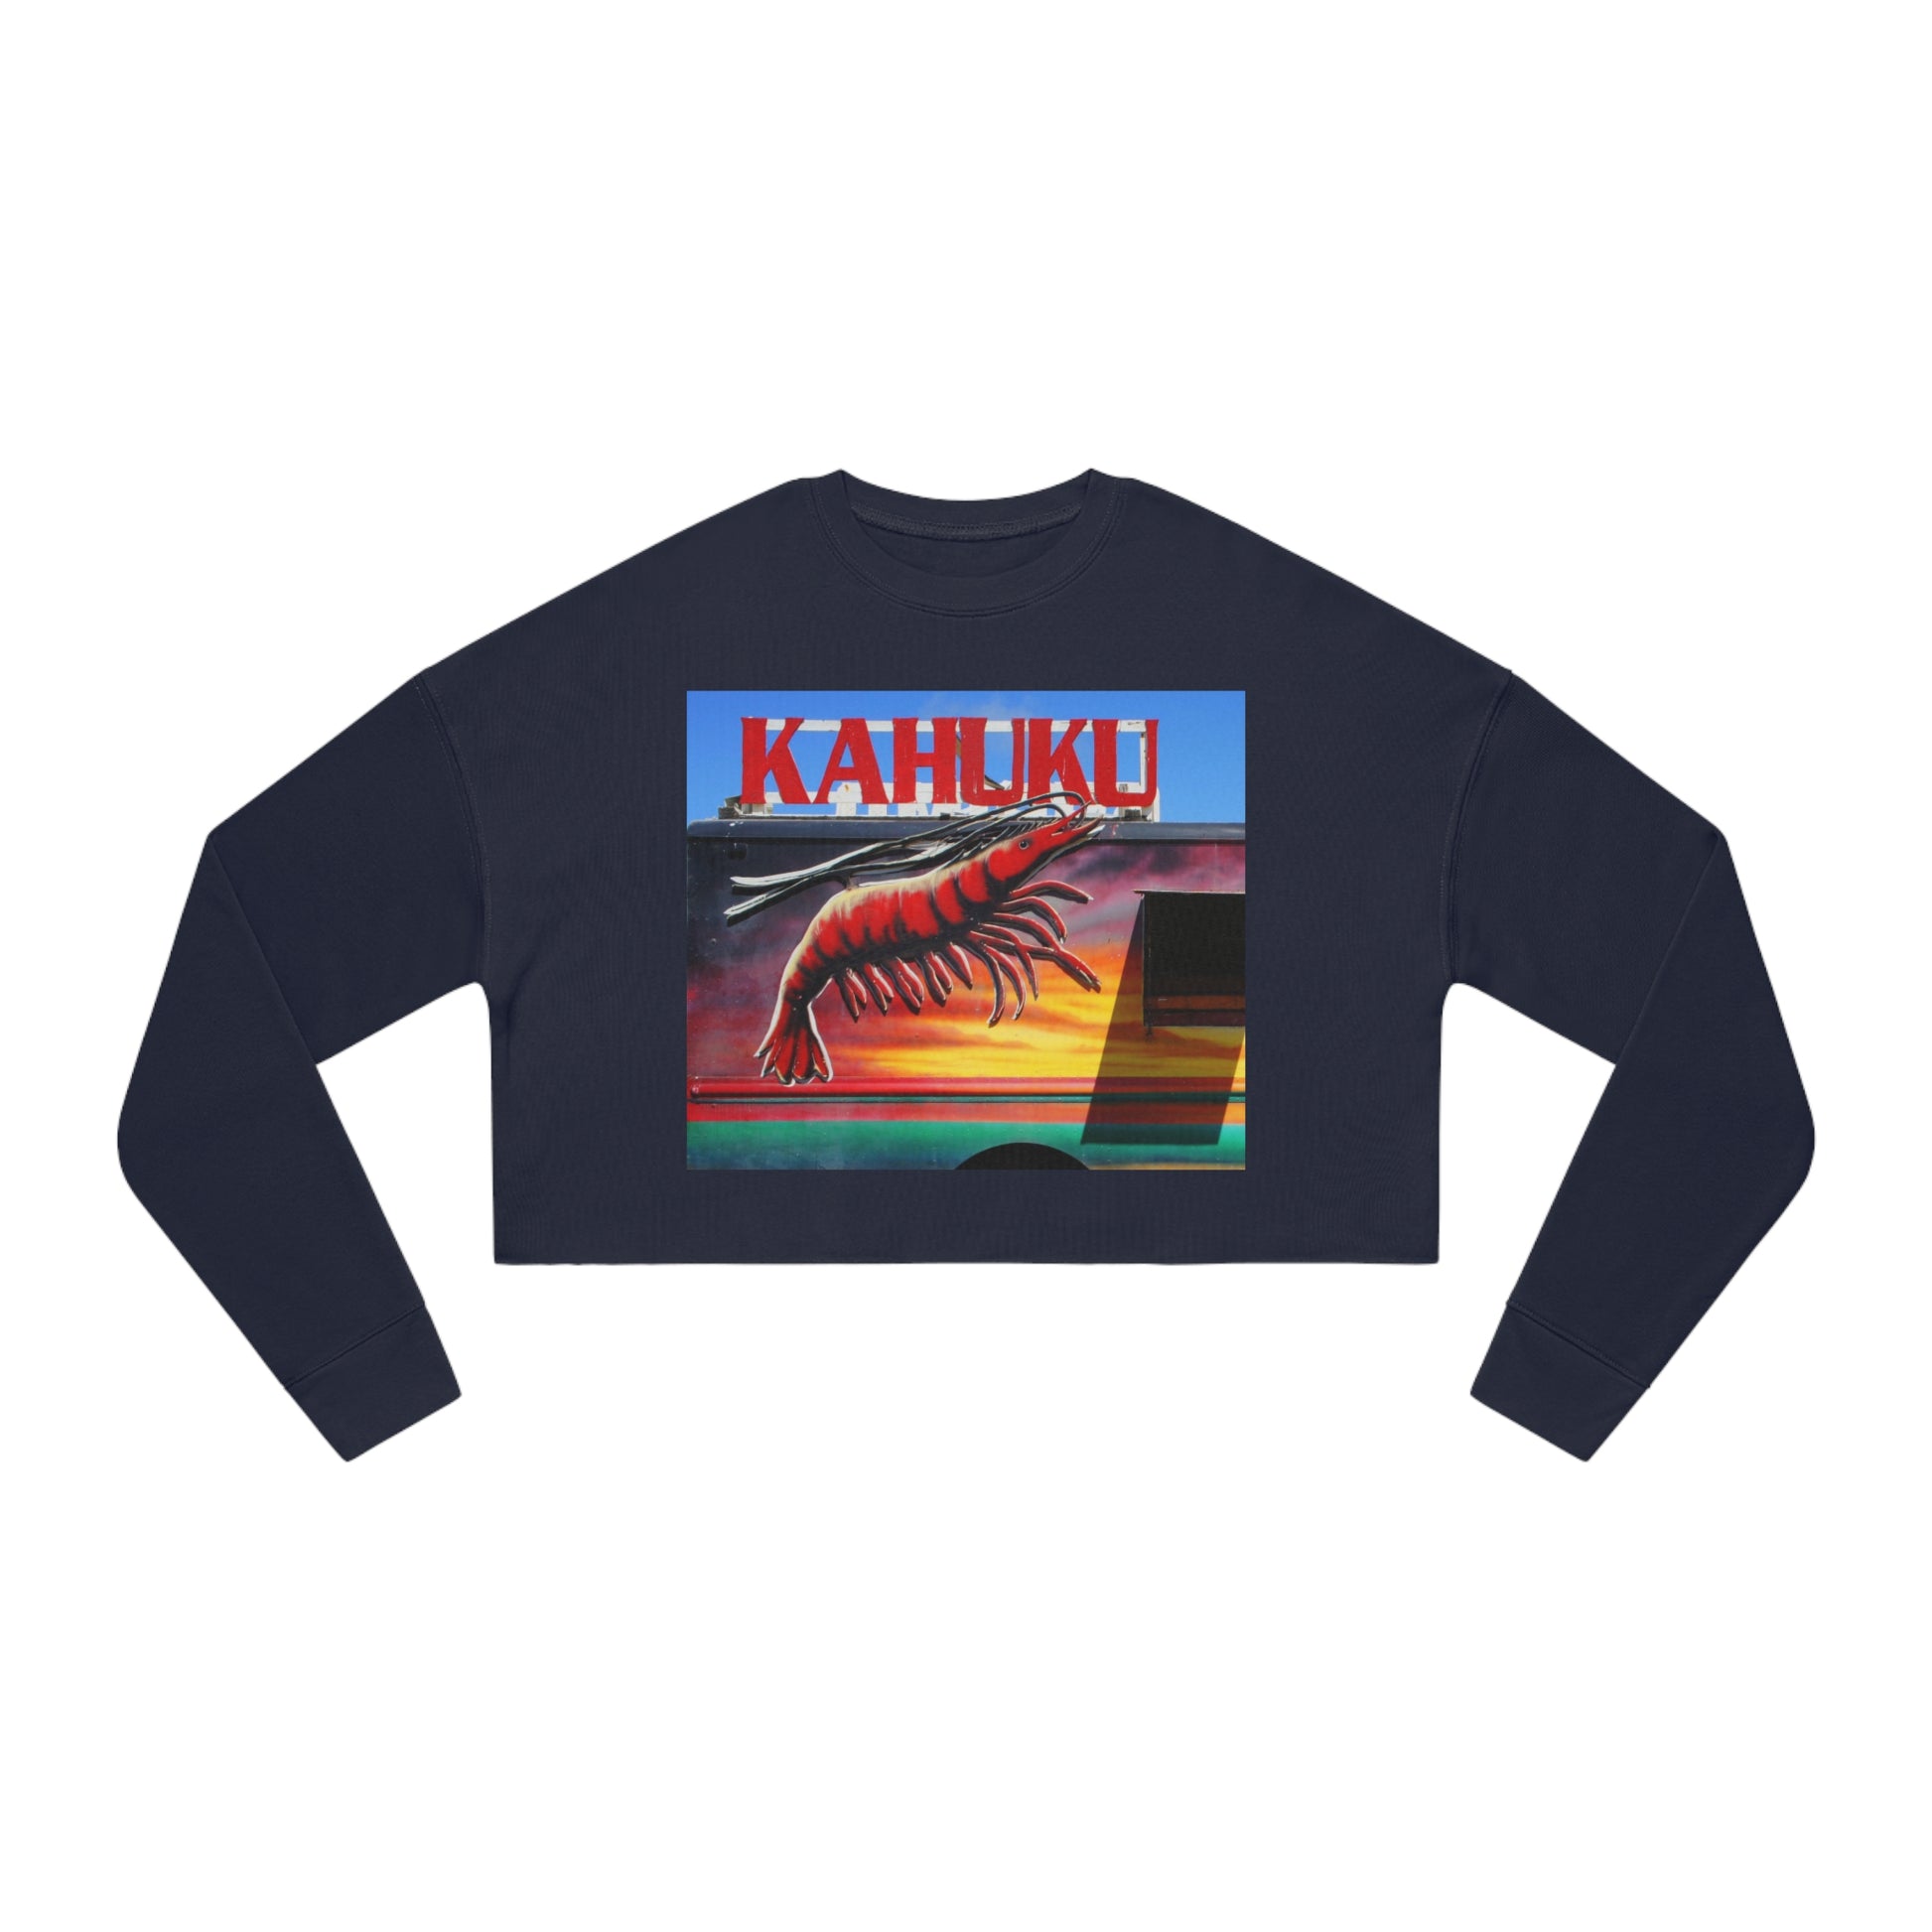 Kahuku Kai - Women's Cropped Sweatshirt - Fry1Productions